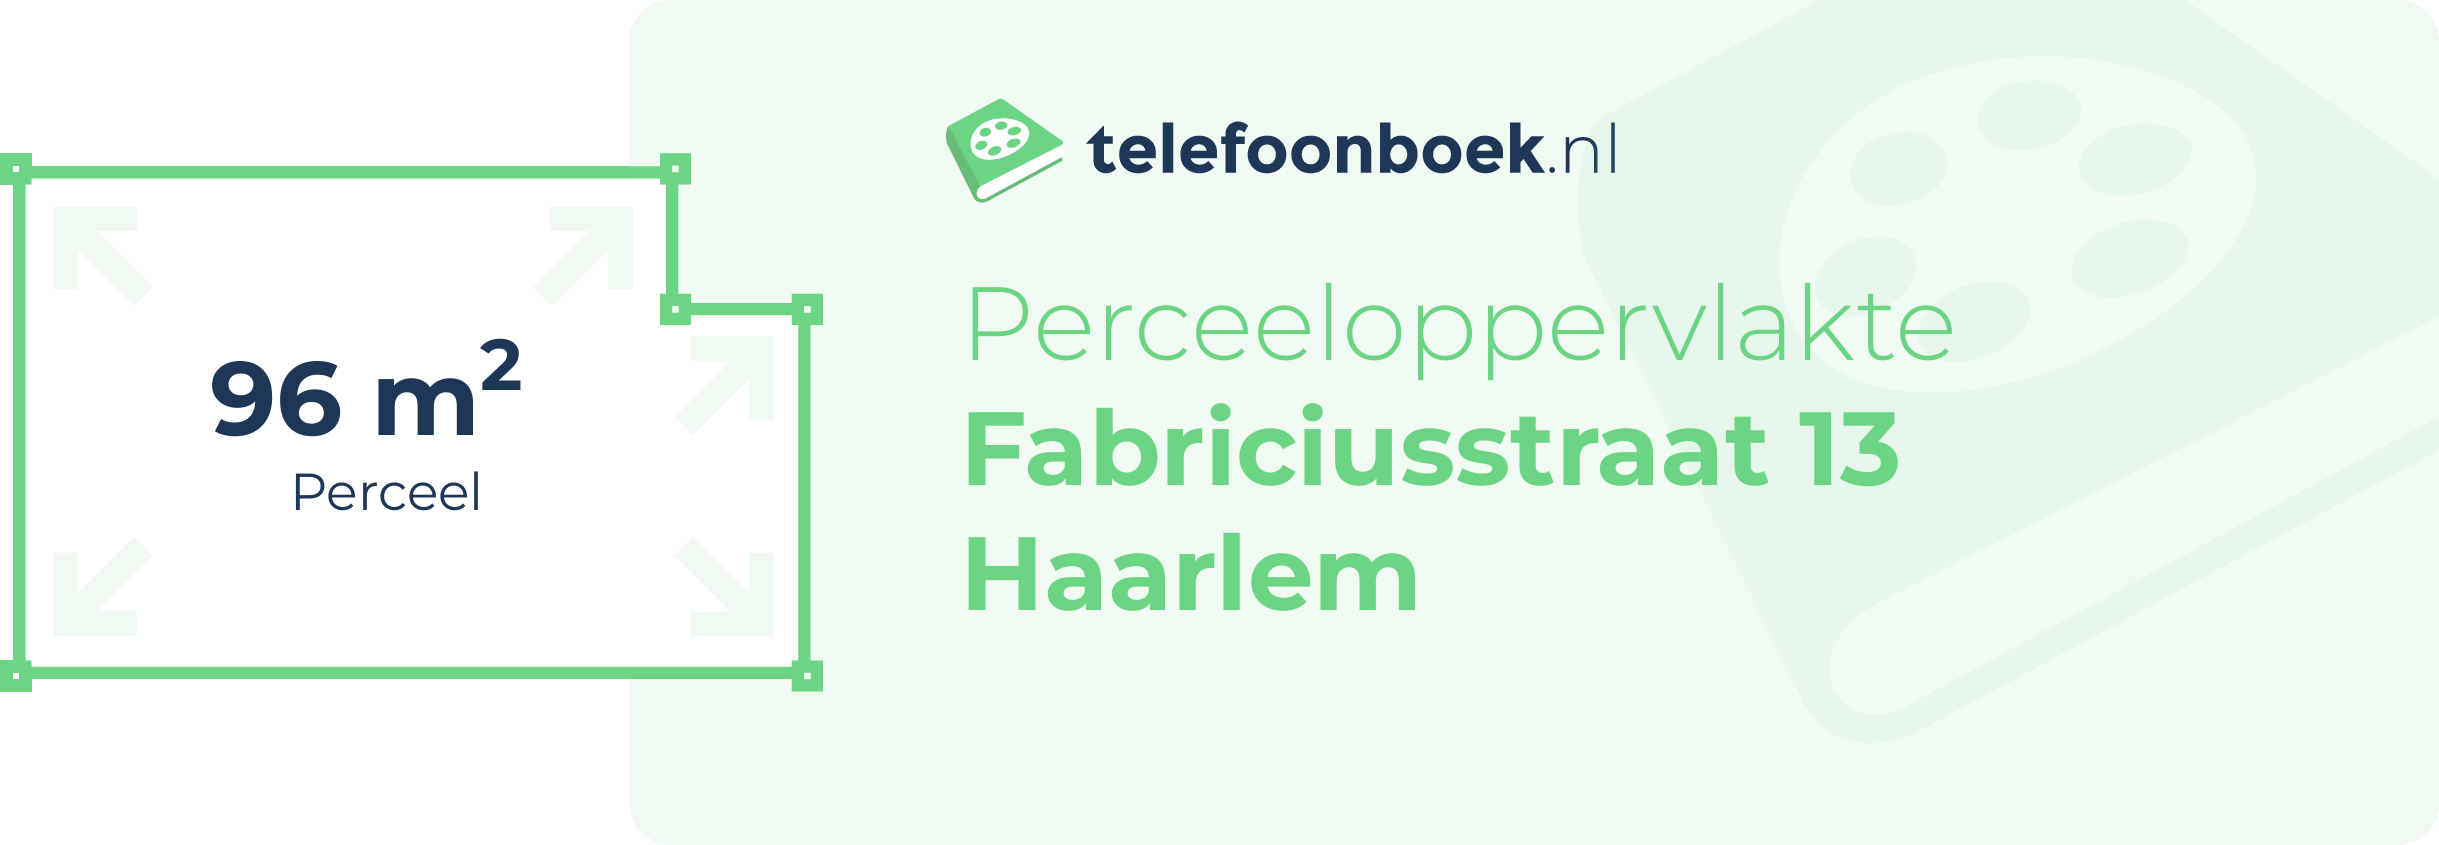 Perceeloppervlakte Fabriciusstraat 13 Haarlem